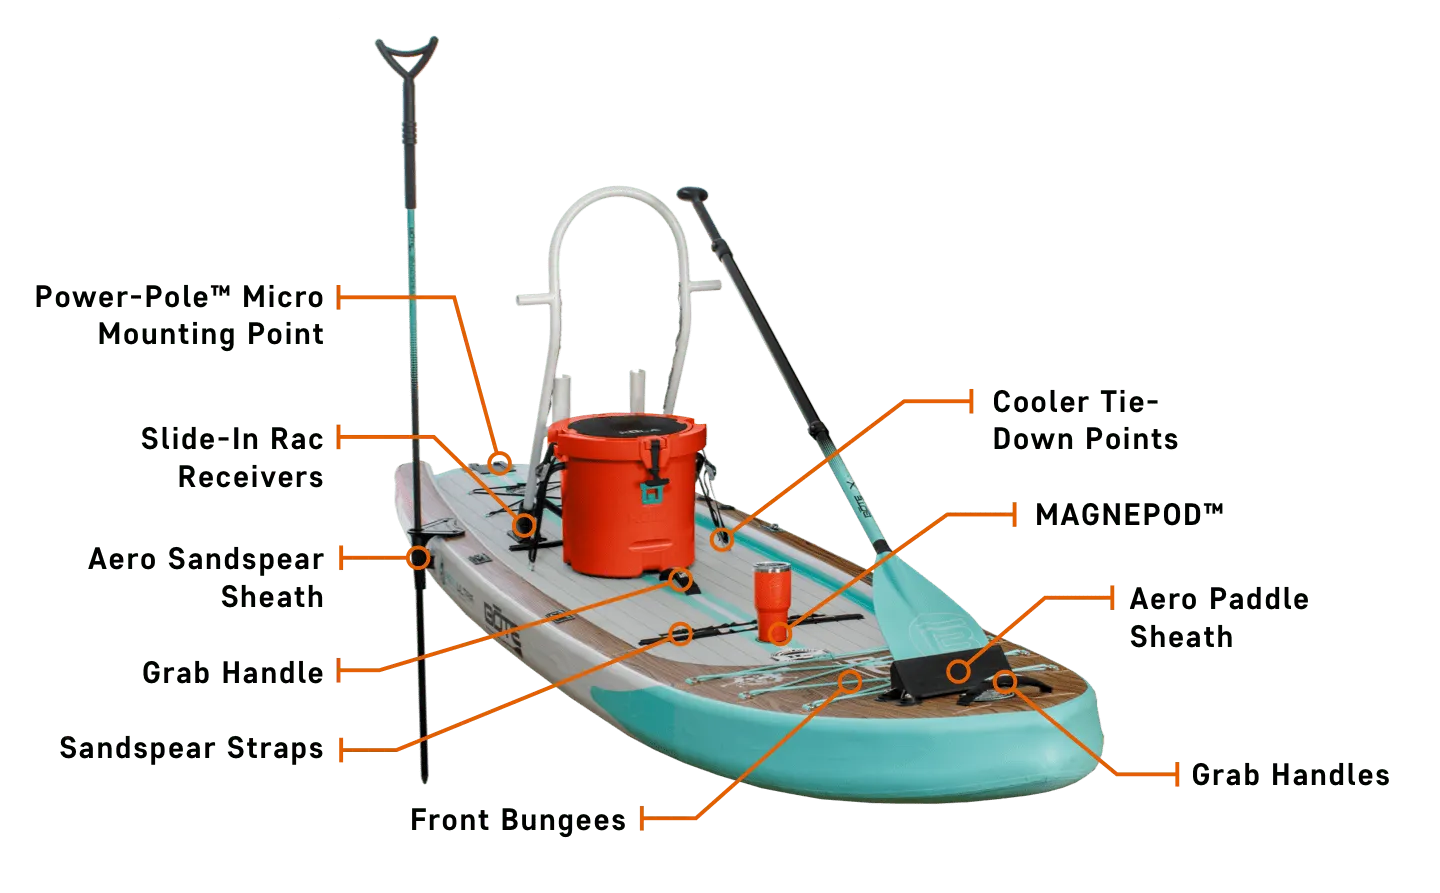 Inflatable BOTE paddleboard diagram.